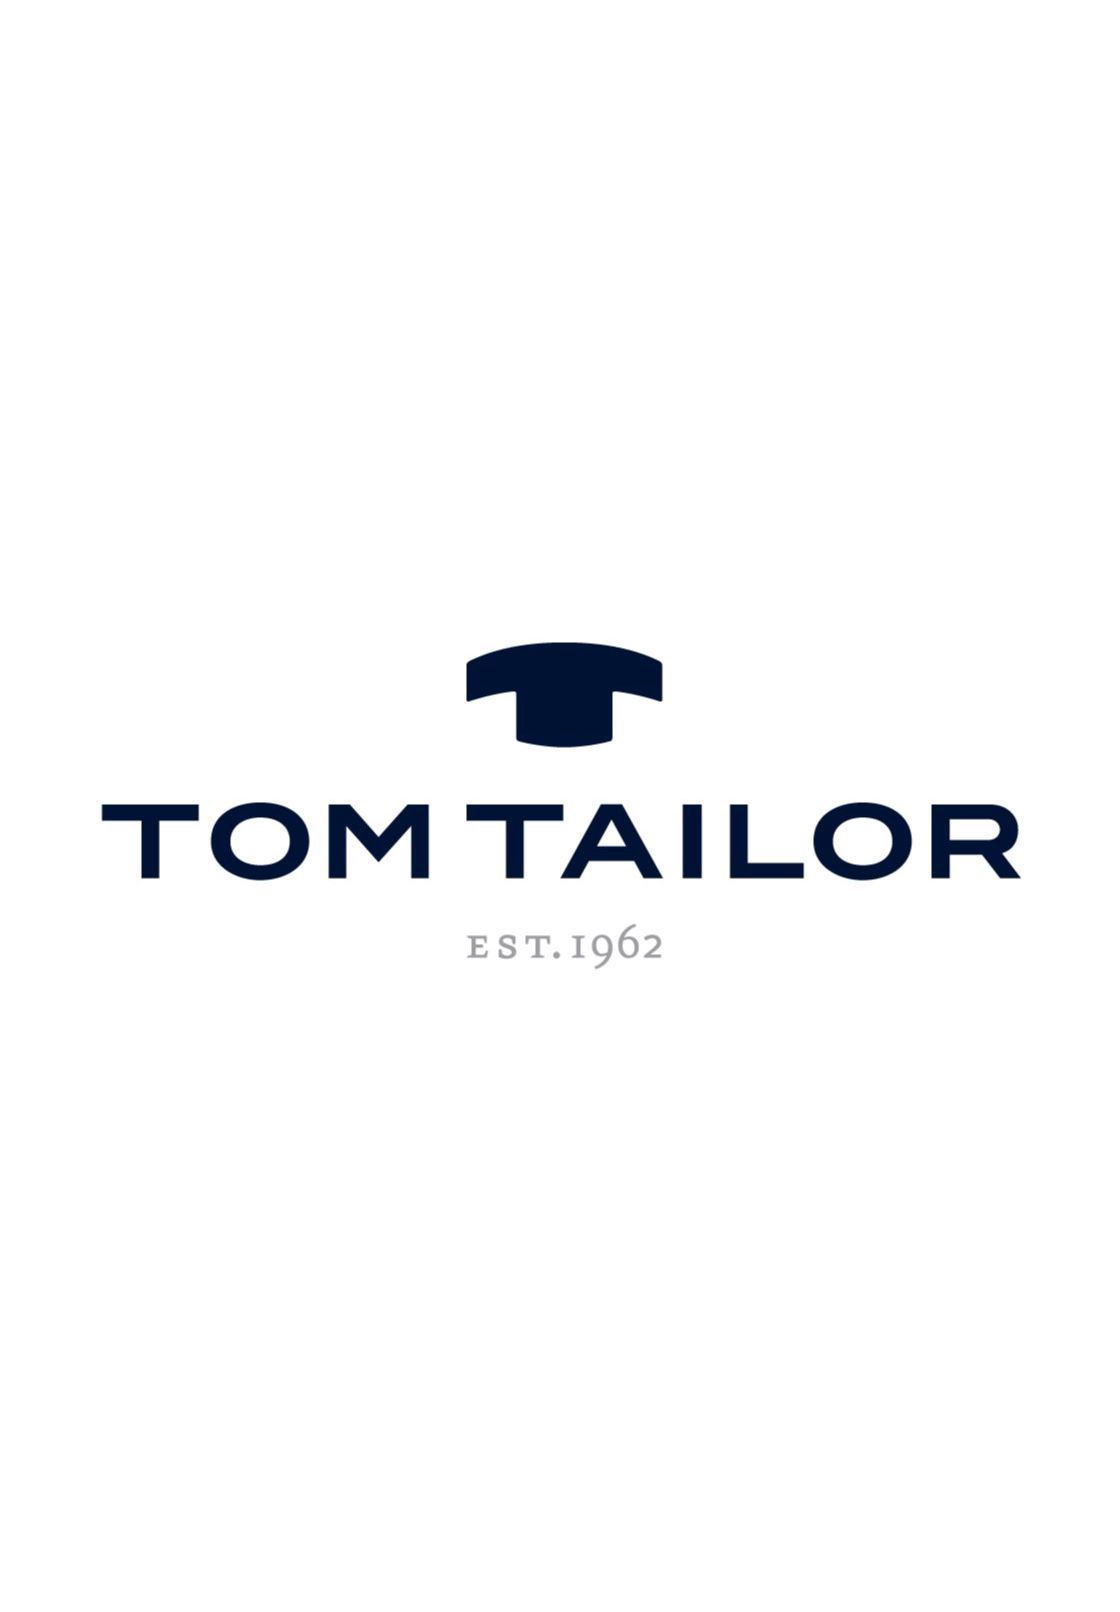 TOM TAILOR Tischläufer 50x150cm DOVE | GALERIA